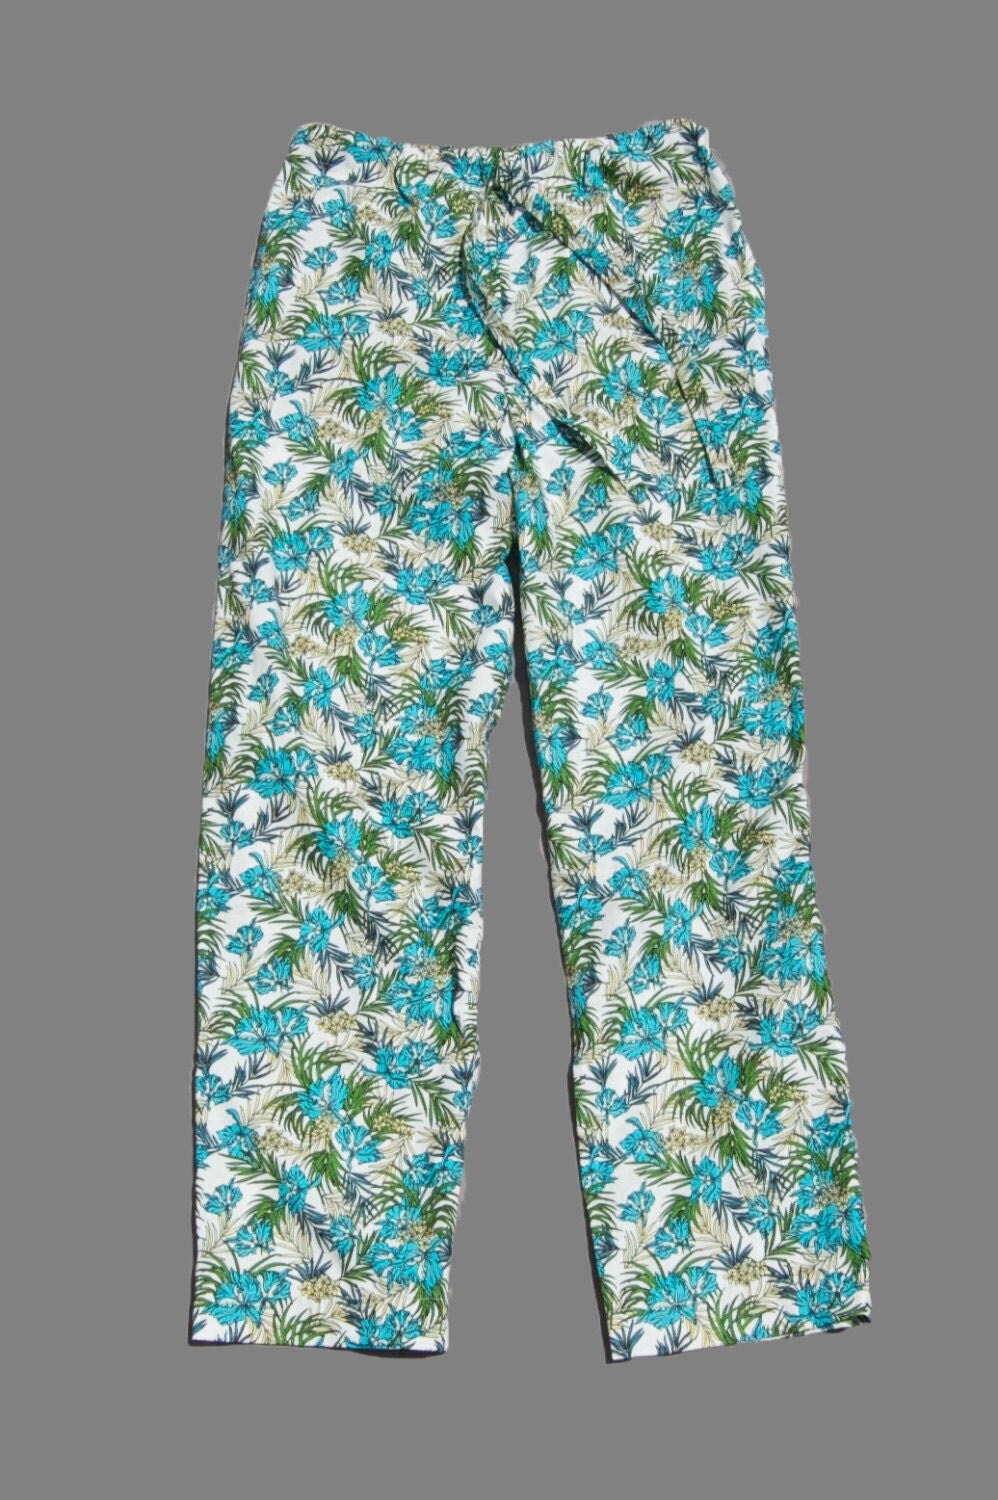 Cool Tropical Print Pajama Pants by PfeifleParker on Etsy